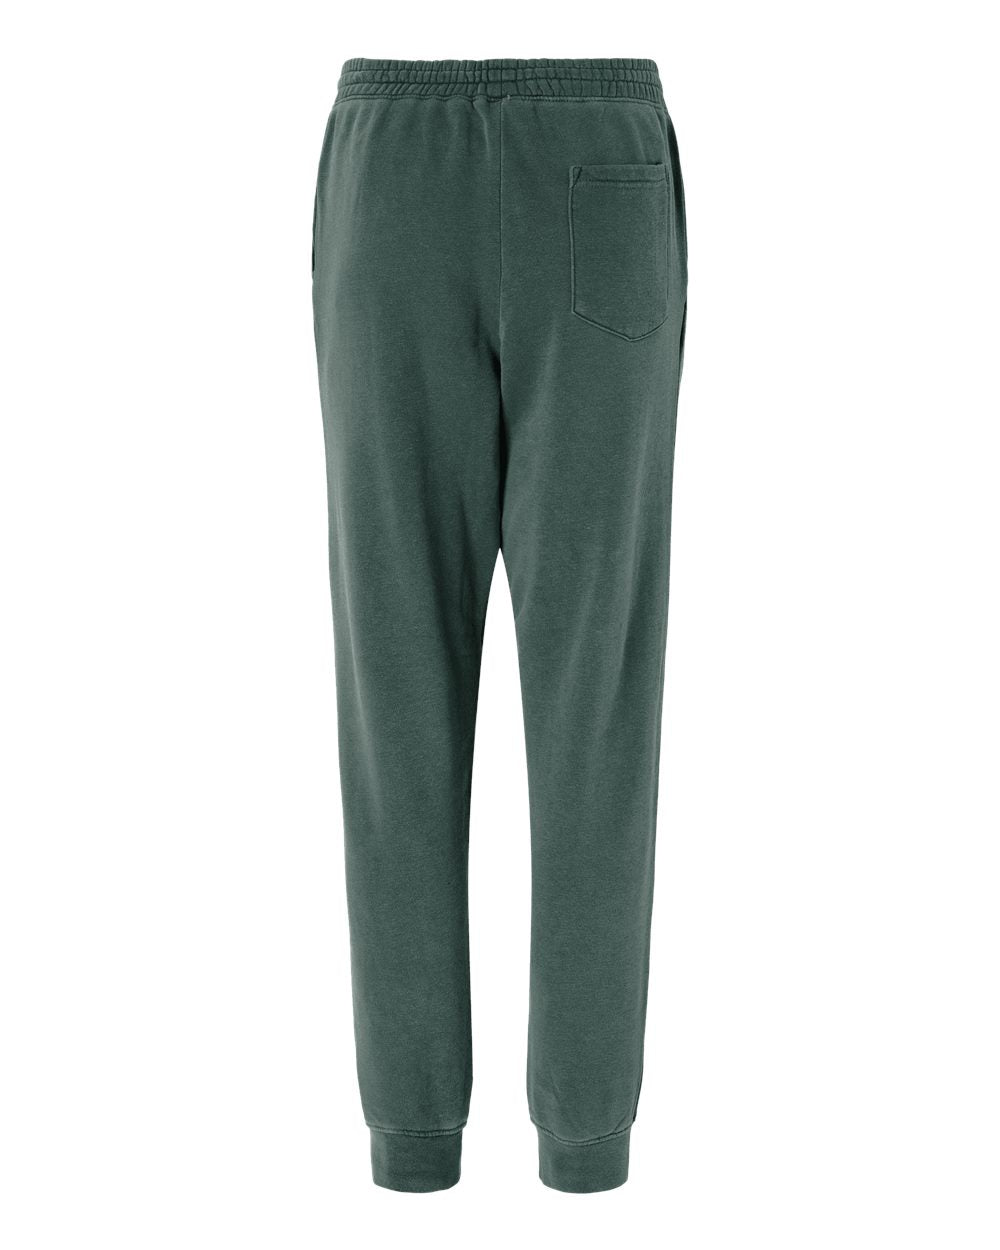 Independent Trading Co. Pigment-Dyed Fleece Pants PRM50PTPD #color_Pigment Alpine Green